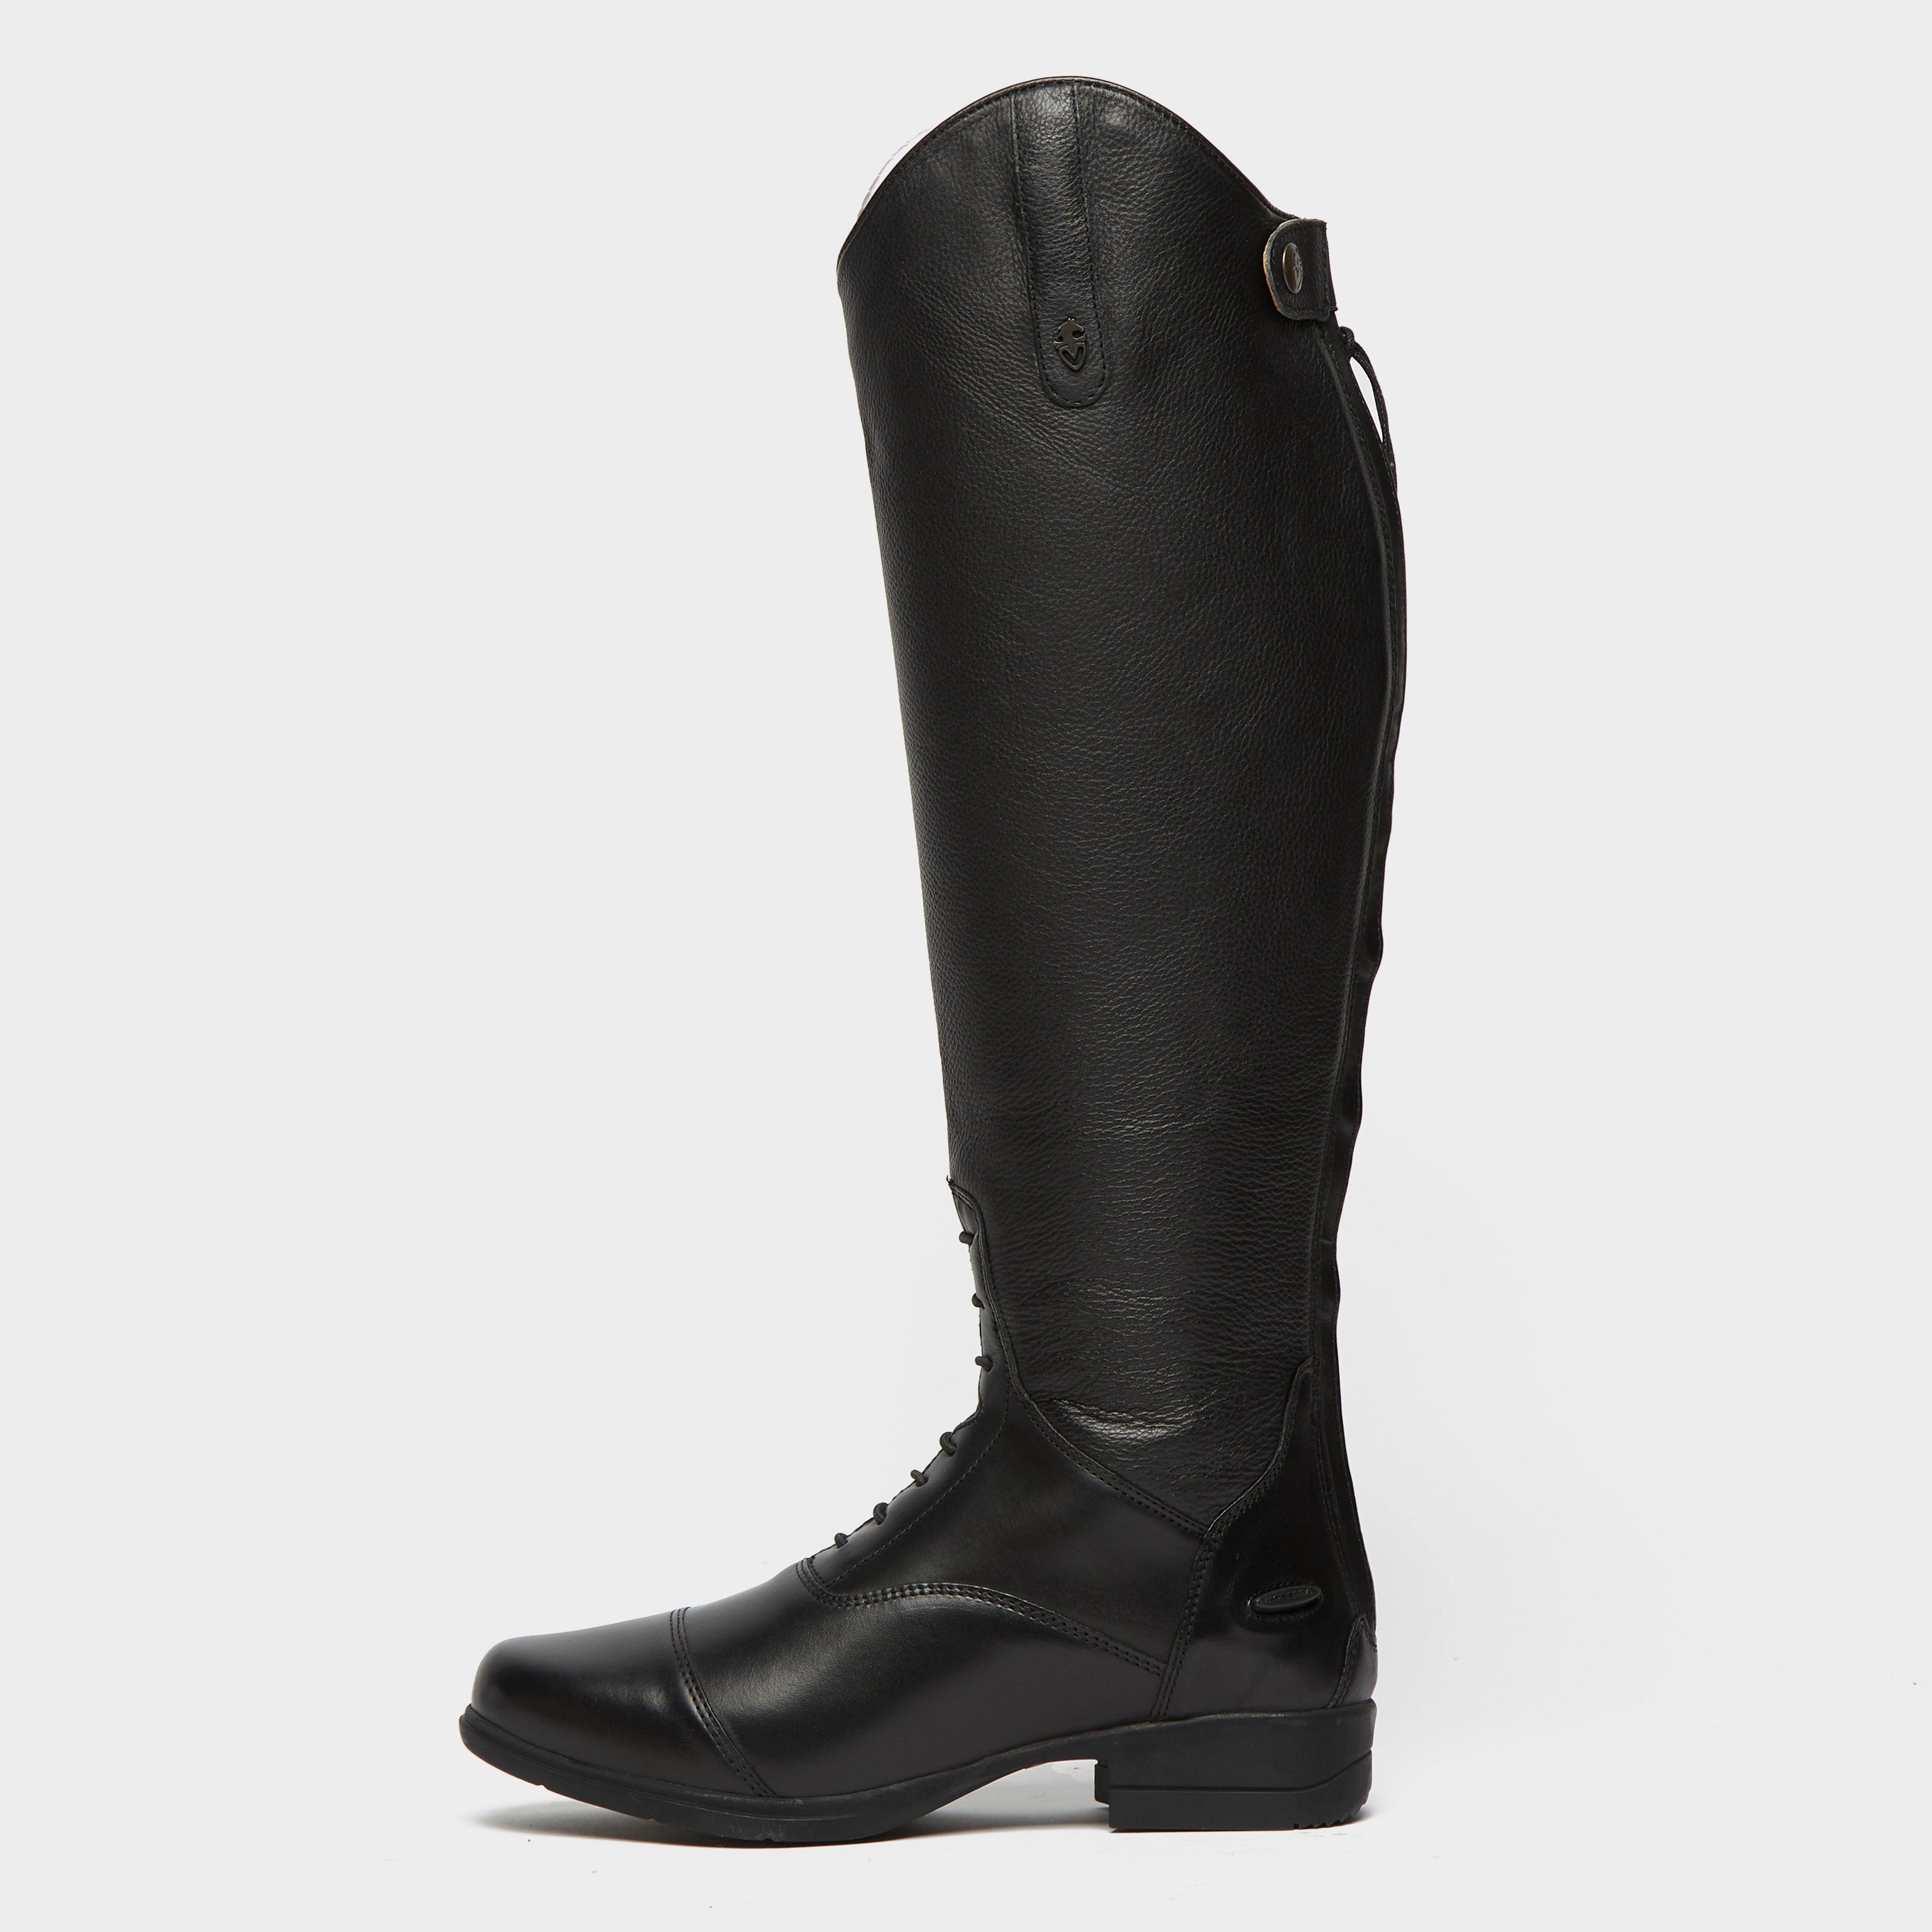 Moretta Moretta Womens Gianna Leather Field Riding Boots Black, BLACK